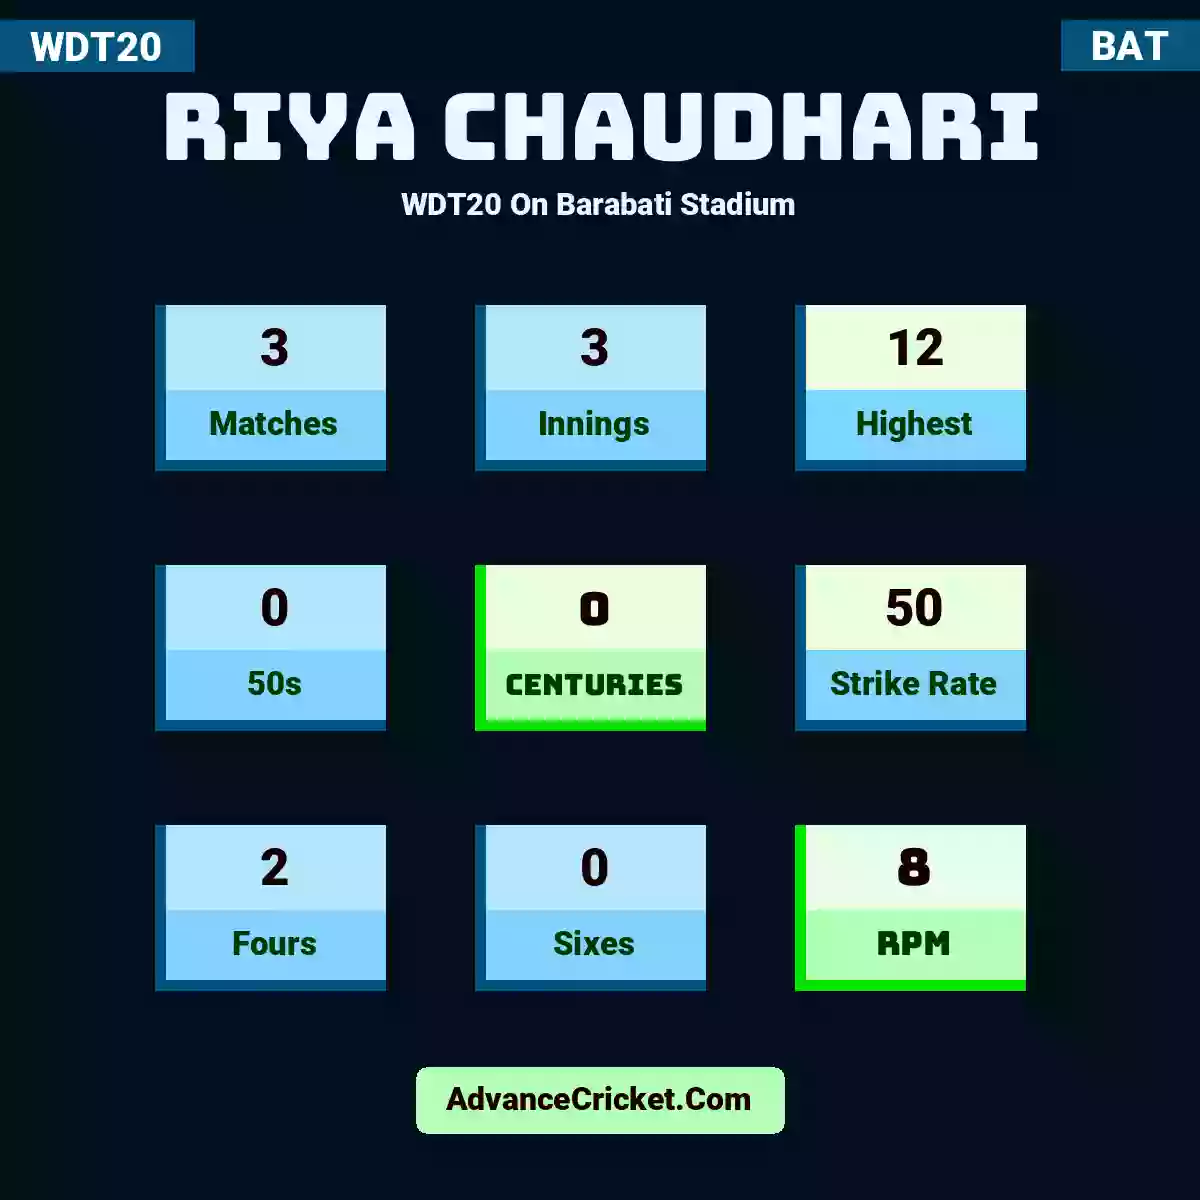 Riya Chaudhari WDT20  On Barabati Stadium, Riya Chaudhari played 3 matches, scored 12 runs as highest, 0 half-centuries, and 0 centuries, with a strike rate of 50. R.Chaudhari hit 2 fours and 0 sixes, with an RPM of 8.